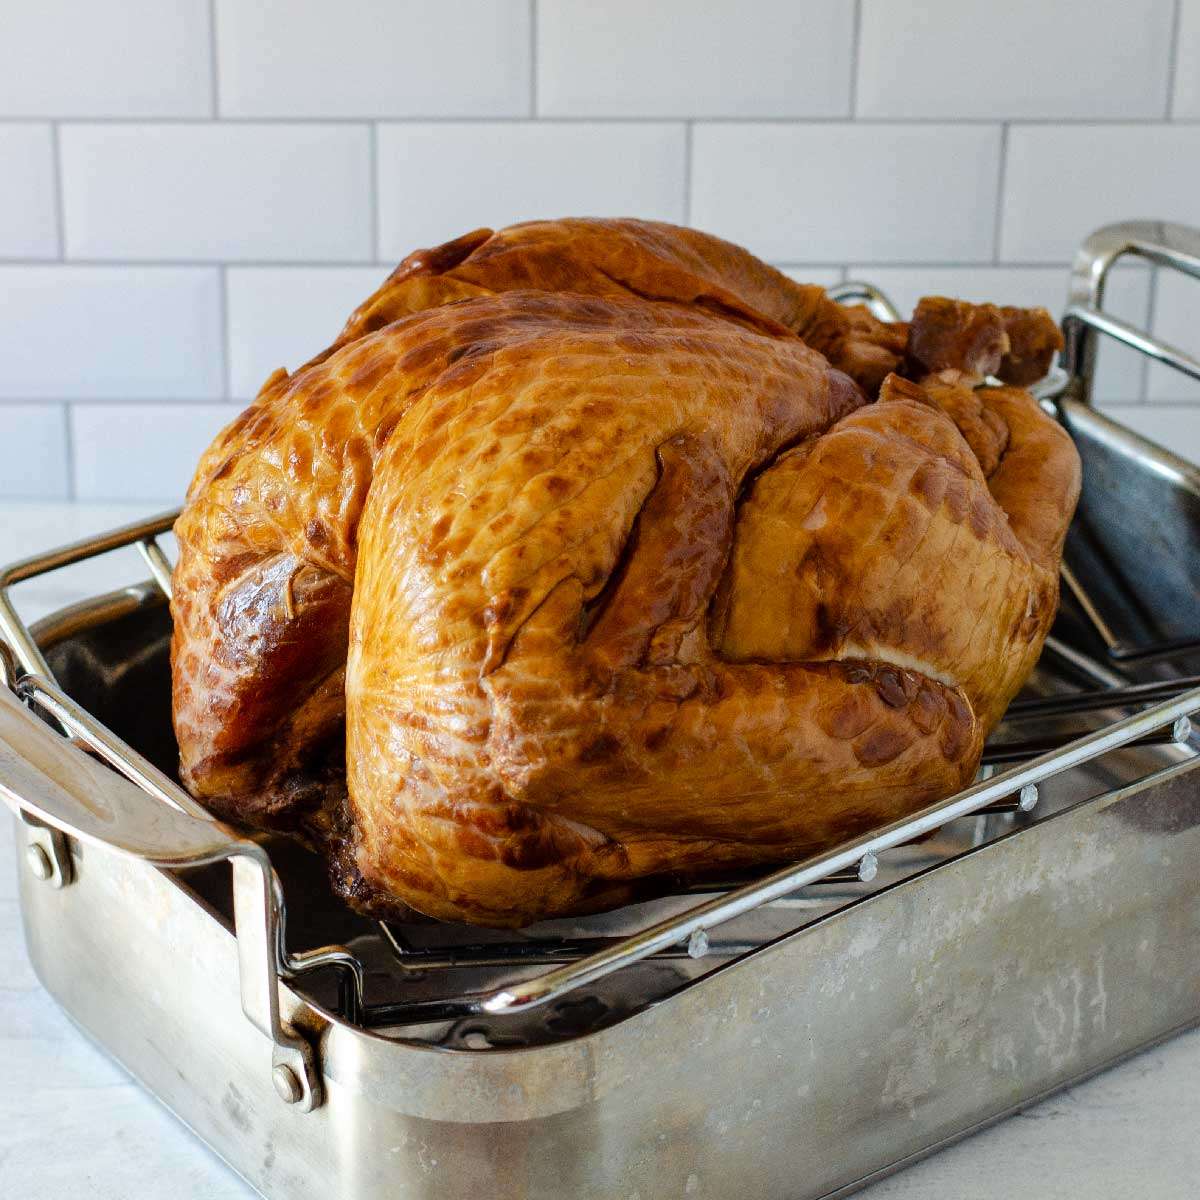 Smoked turkey in roasting pan